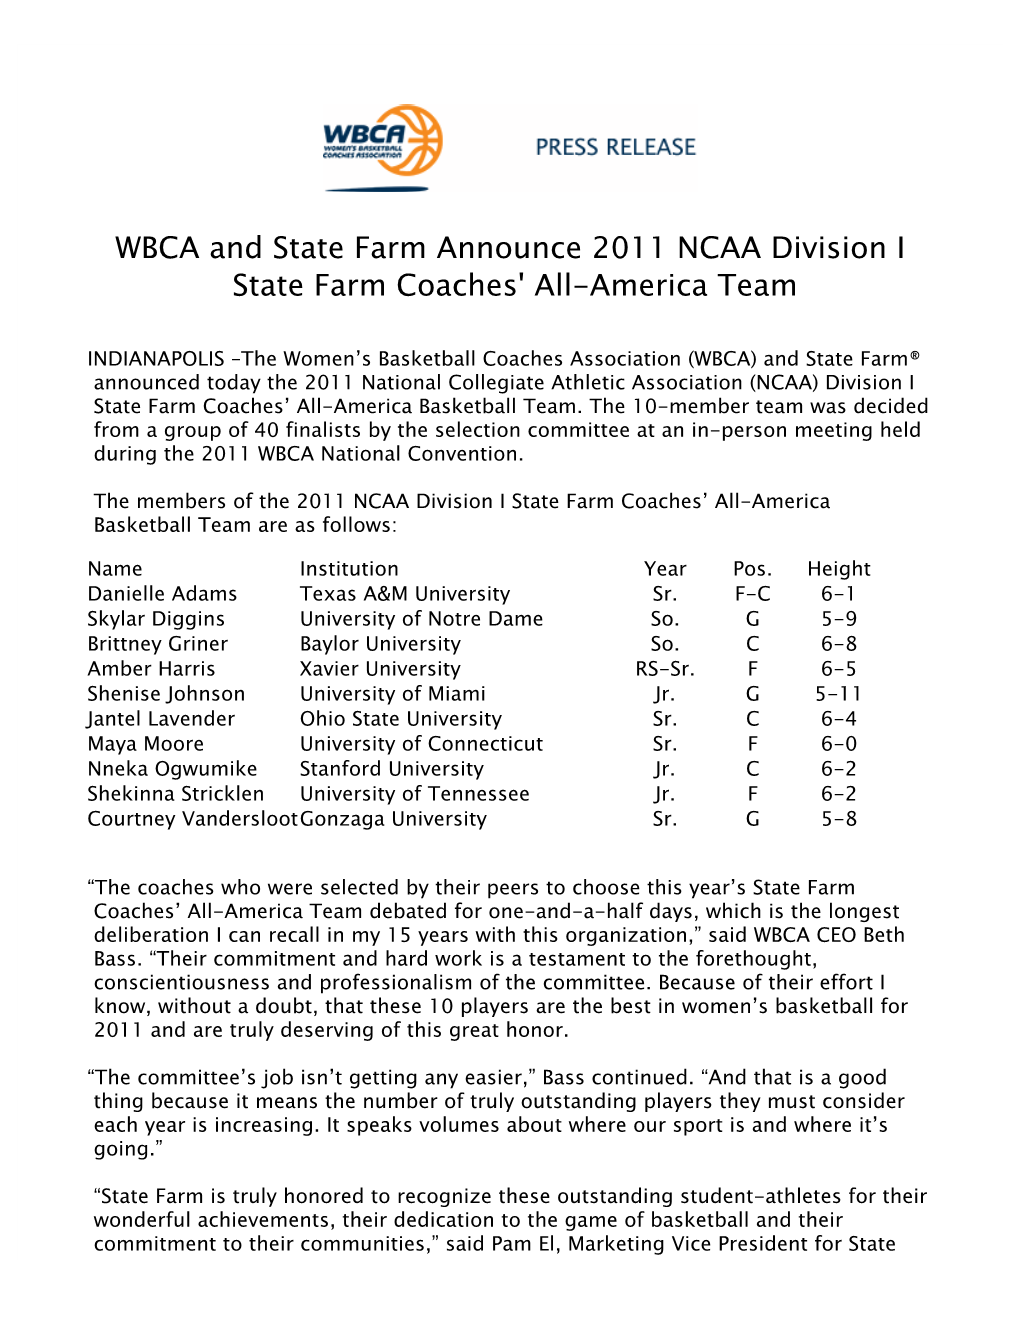 WBCA and State Farm Announce 2011 NCAA Division I State Farm Coaches' All-America Team